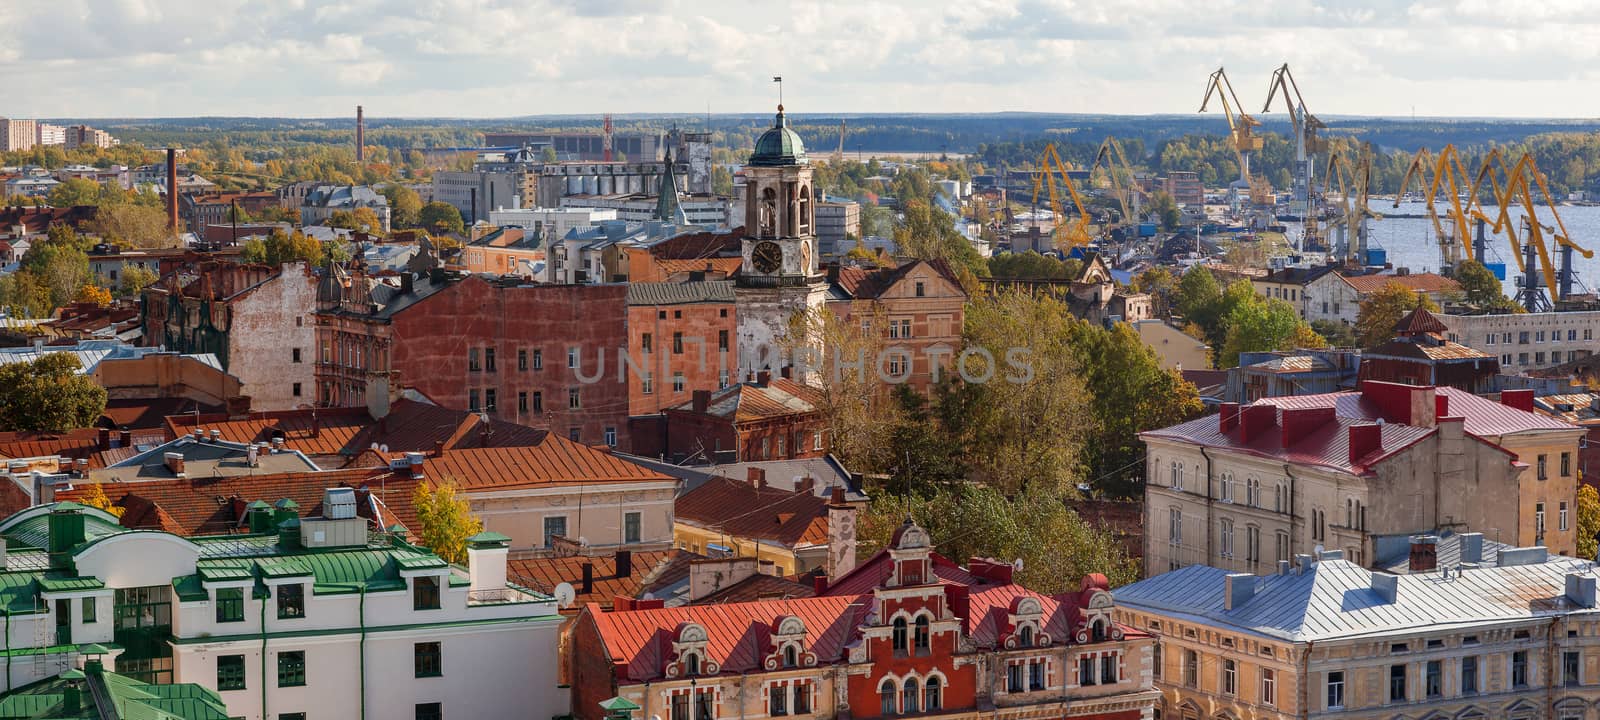 Vyborg (Viipuri), panorama view in sunny autumn day. Russia. by aksenovko